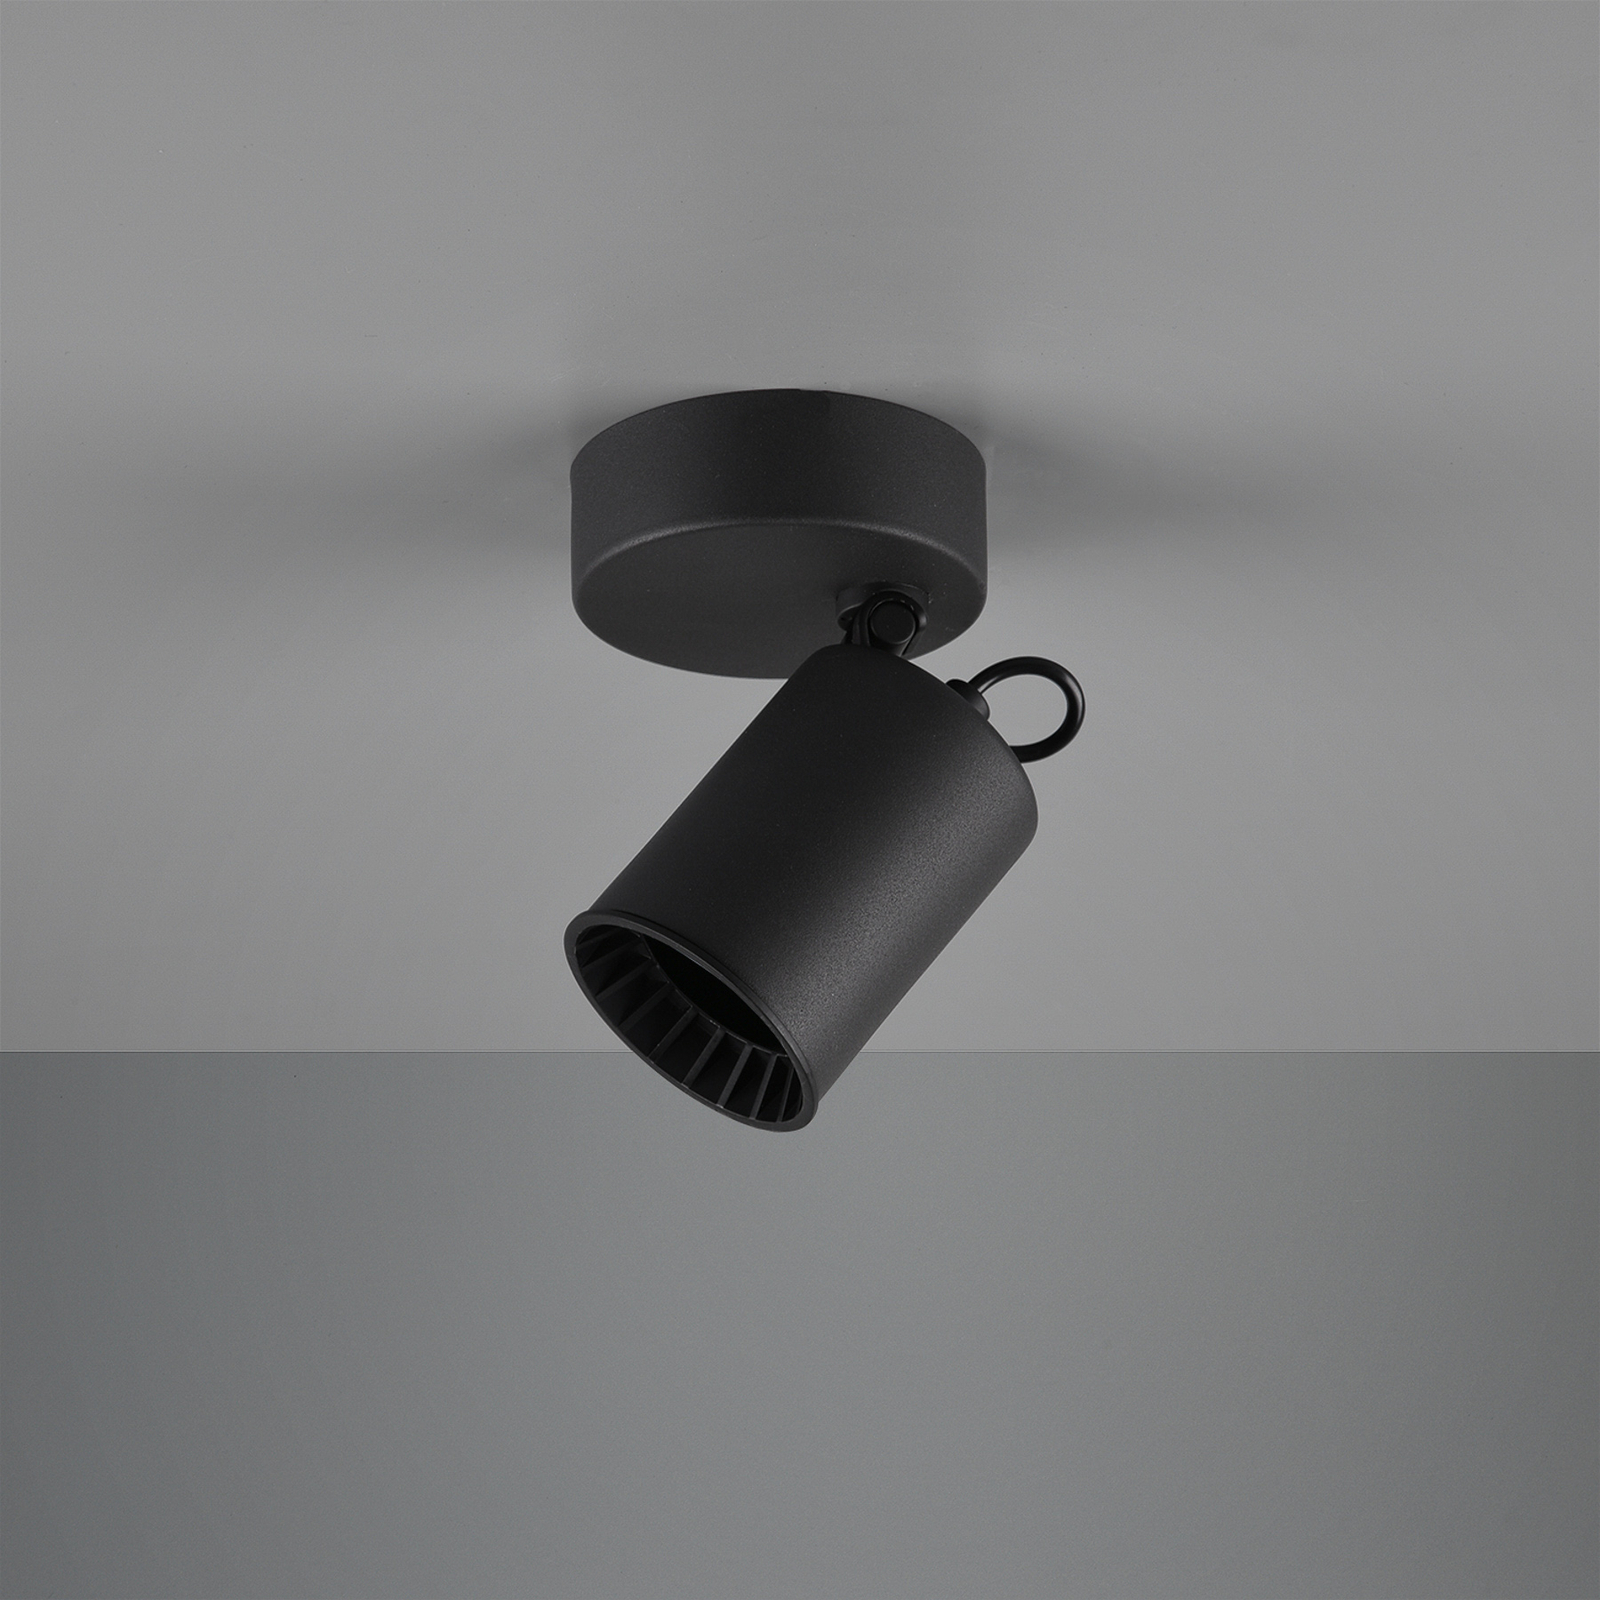 Pago wall spotlight, one-bulb, black